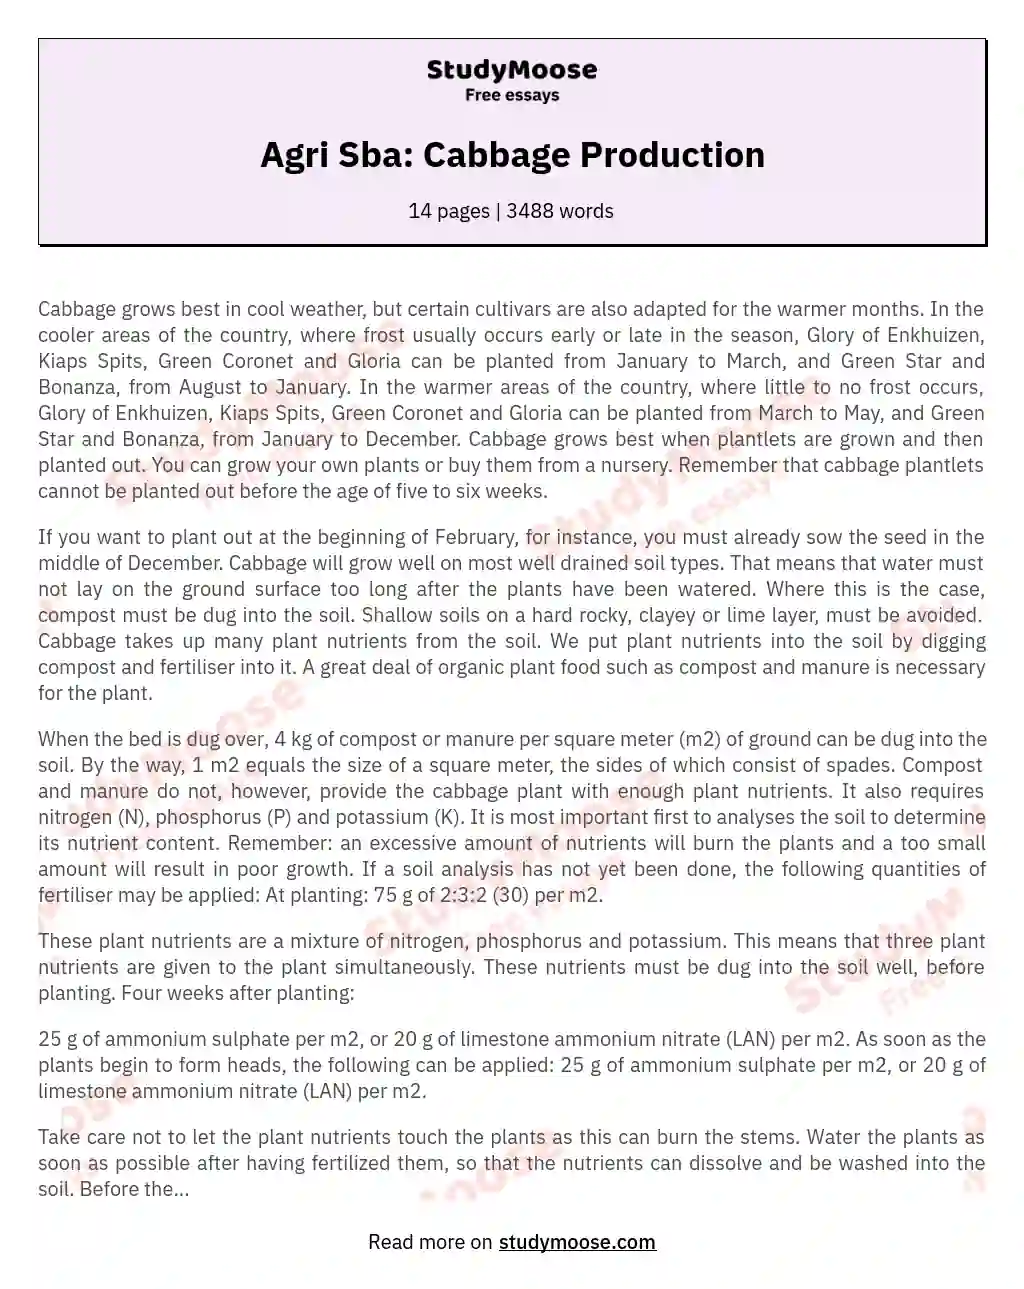 Agri Sba: Cabbage Production essay